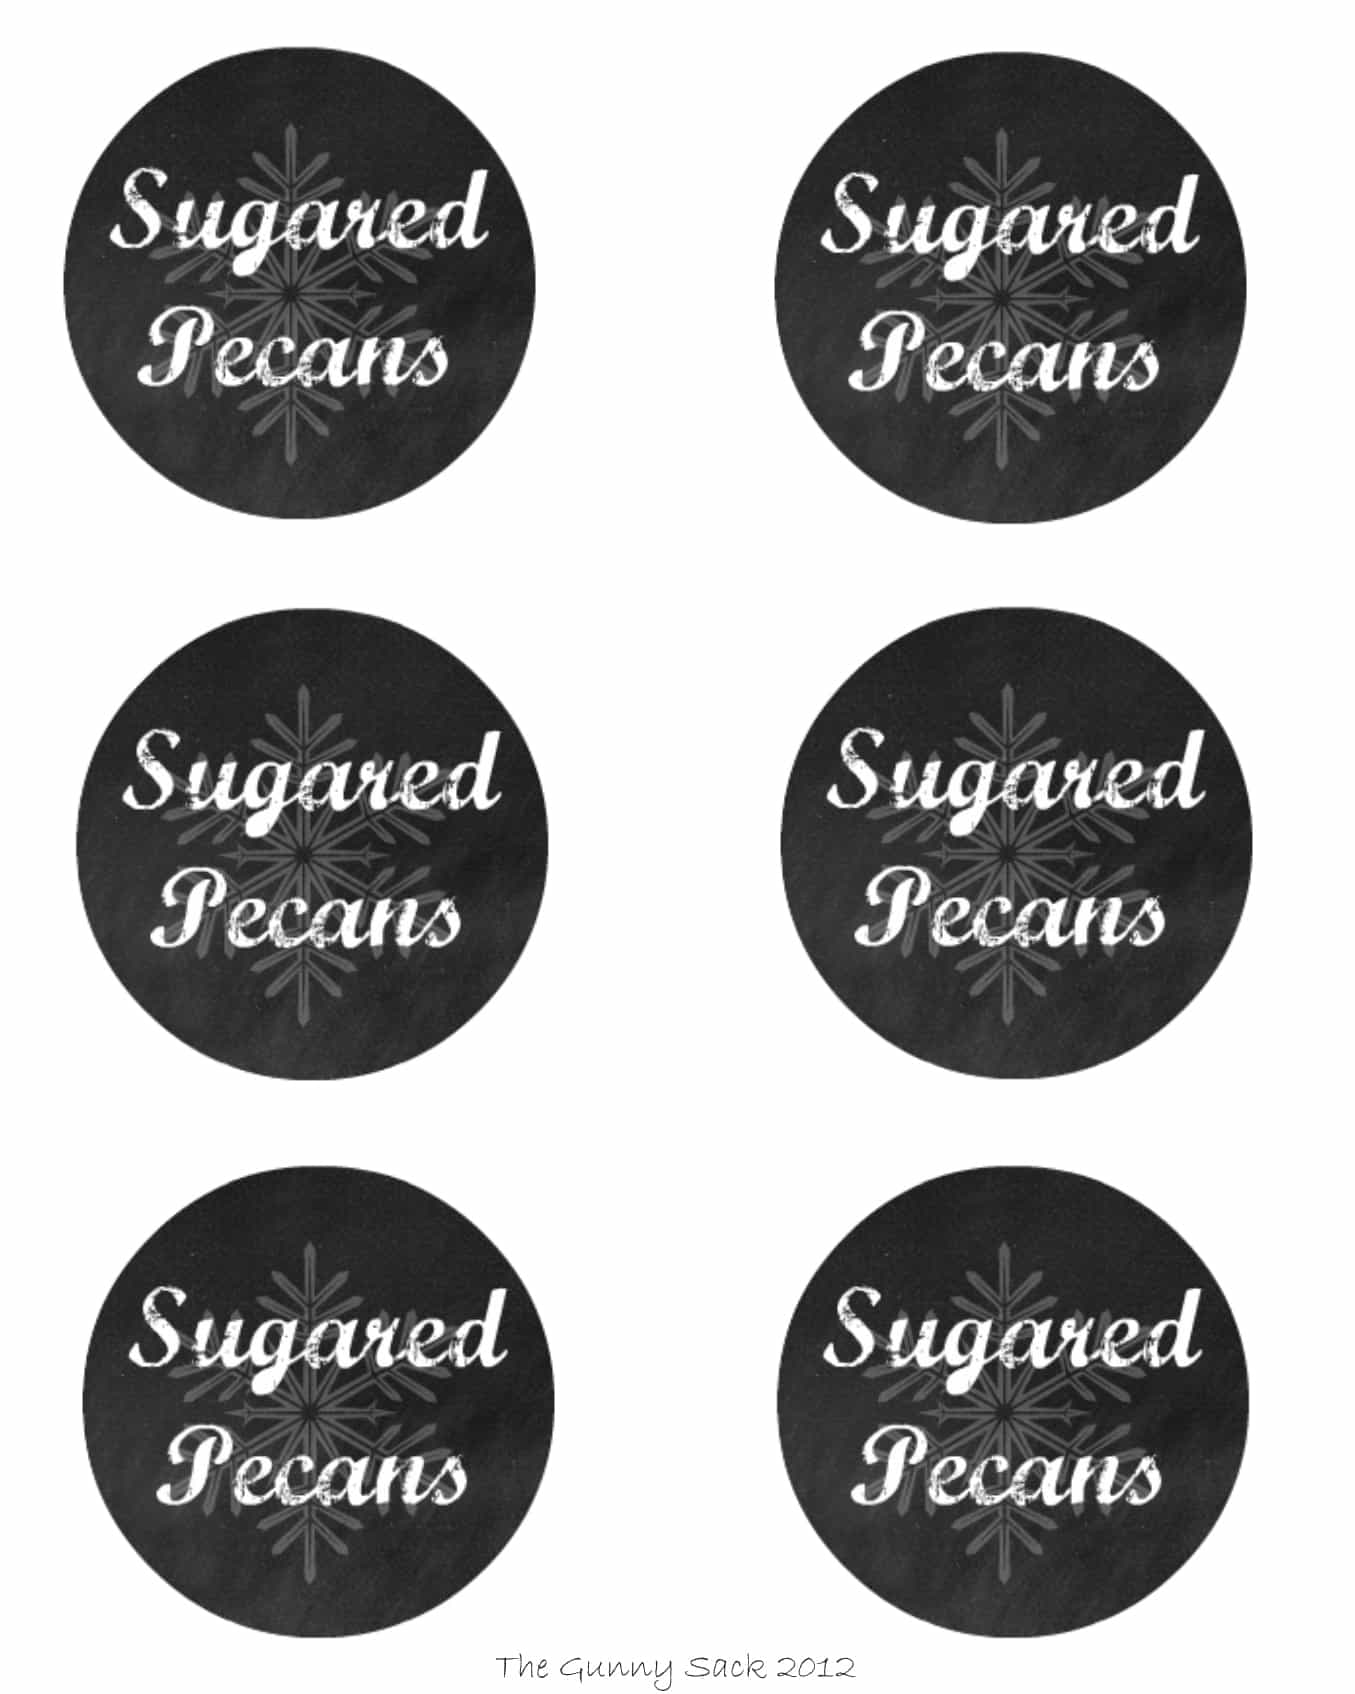 Sugared Pecans